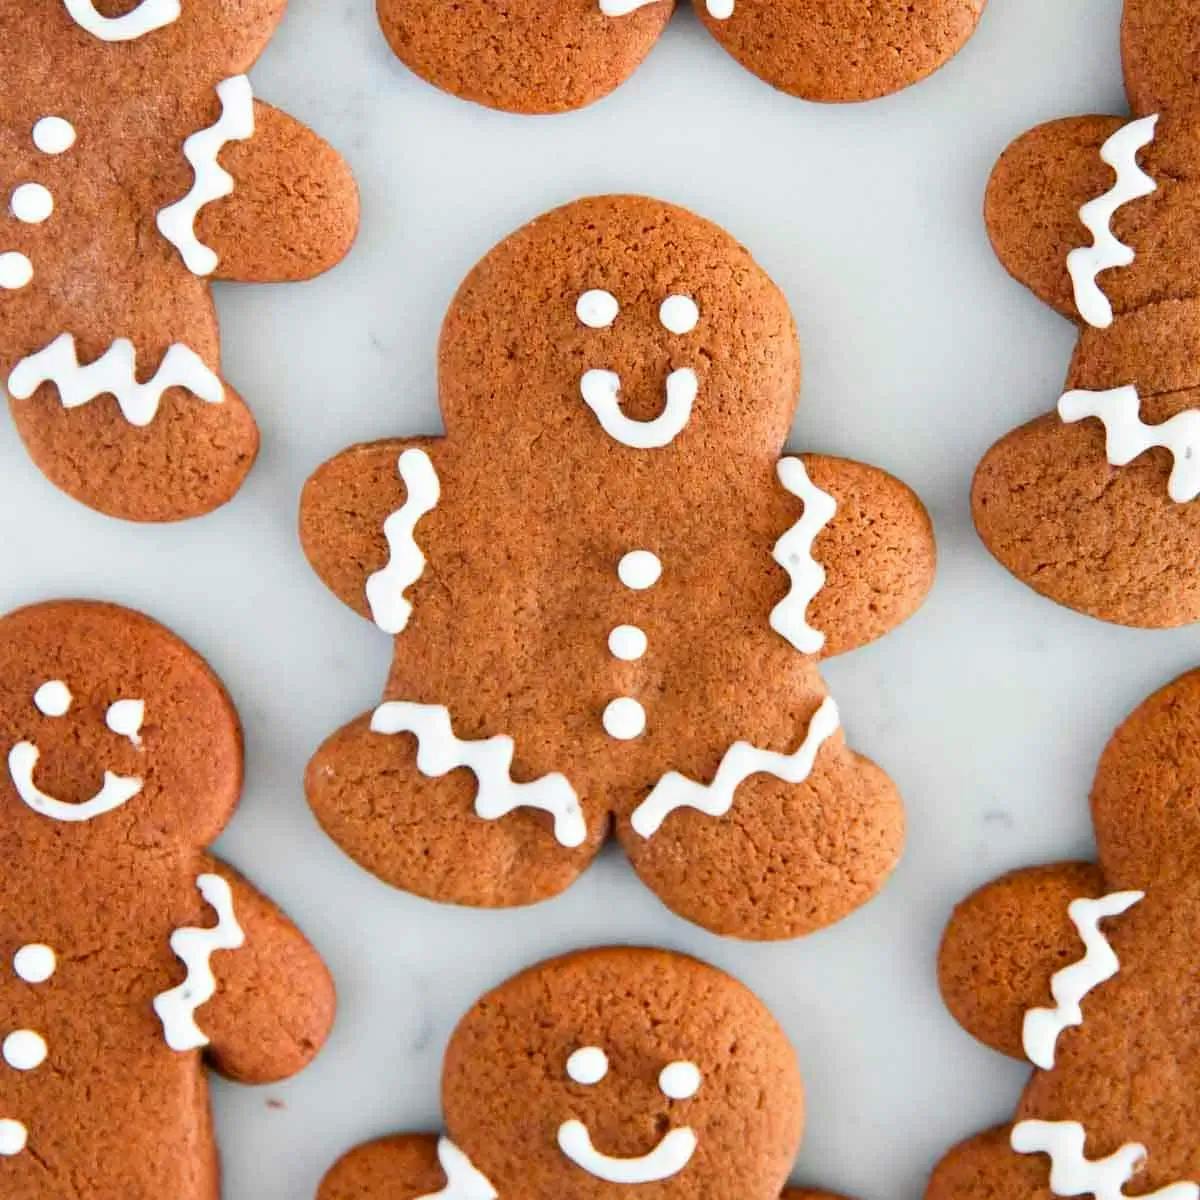 Gingerbread men cookies in a row.